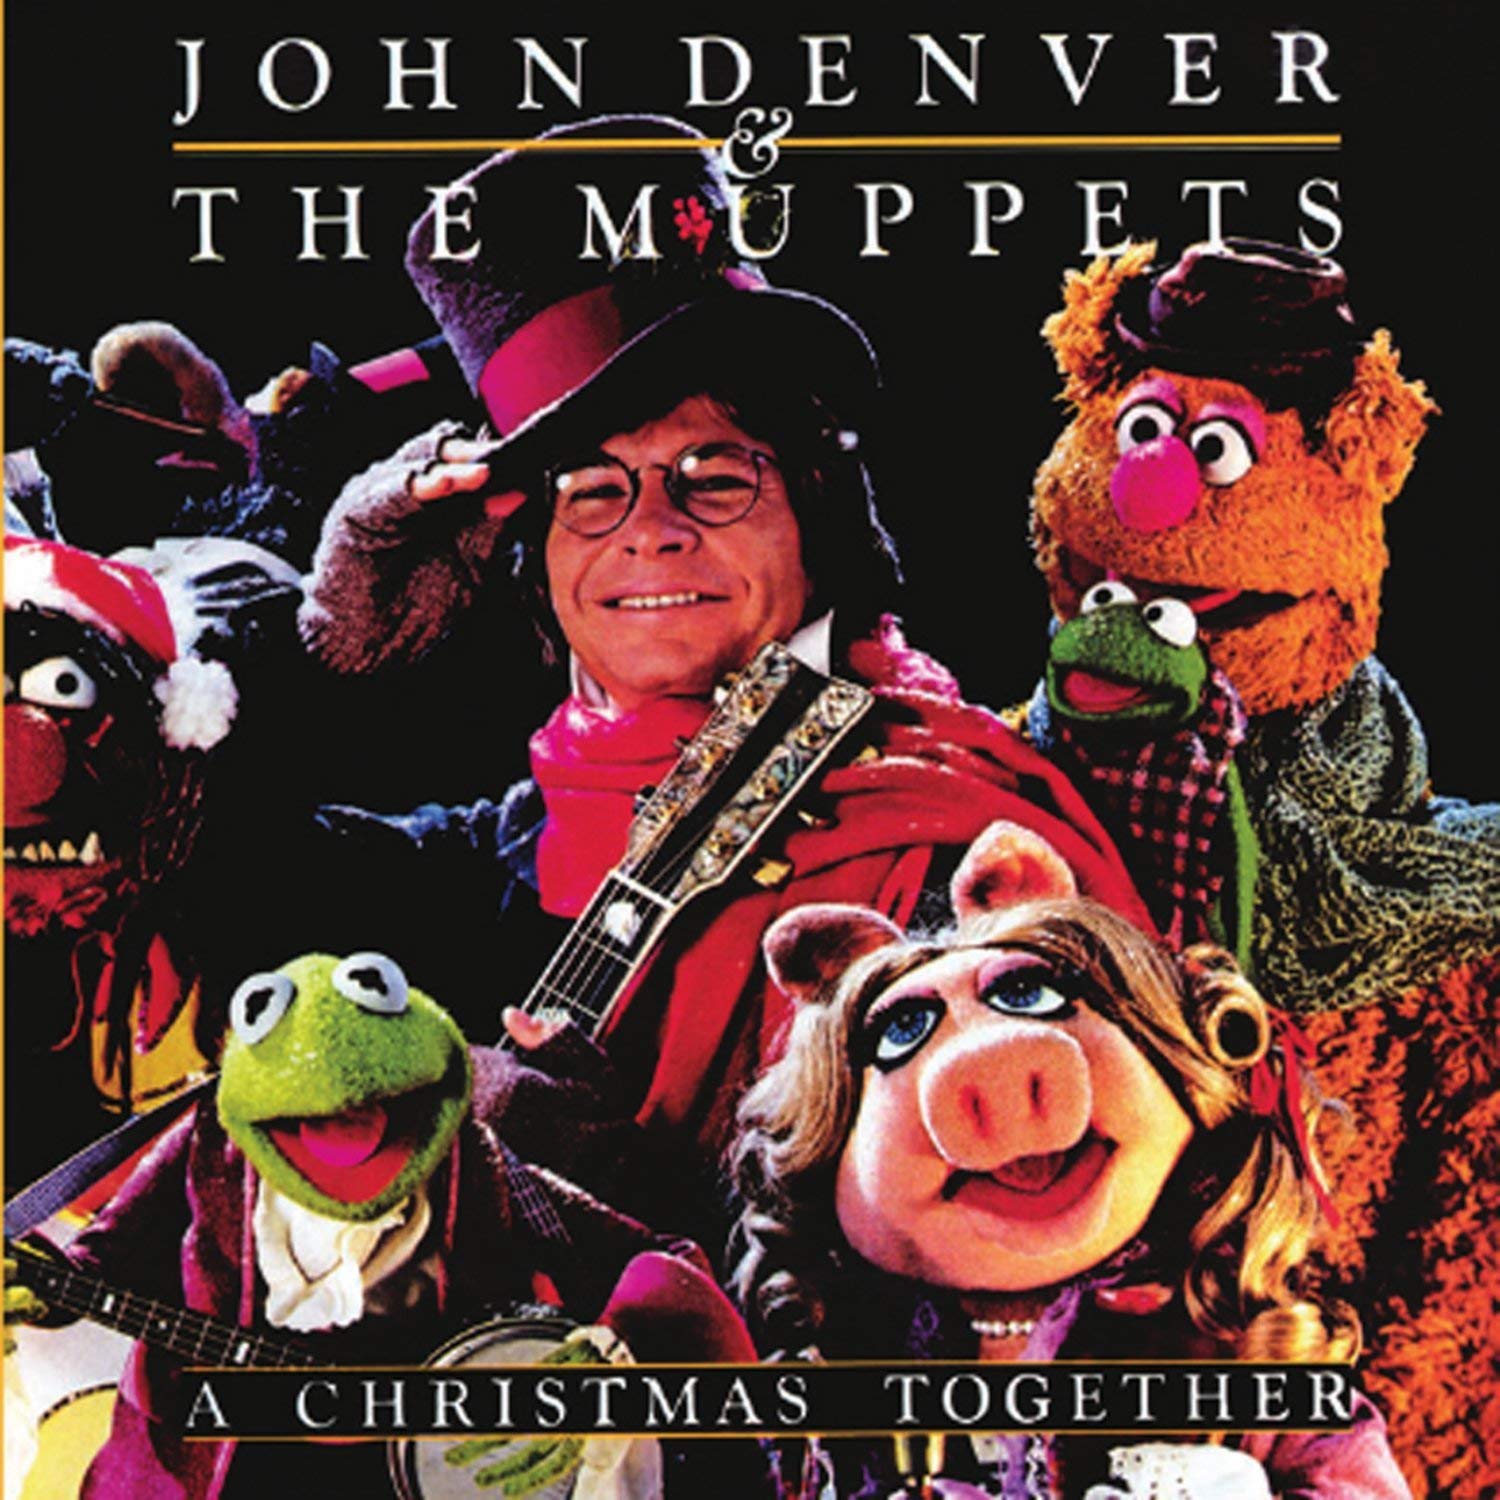 John Denver & The Muppets - A Christmas Together Album Cover